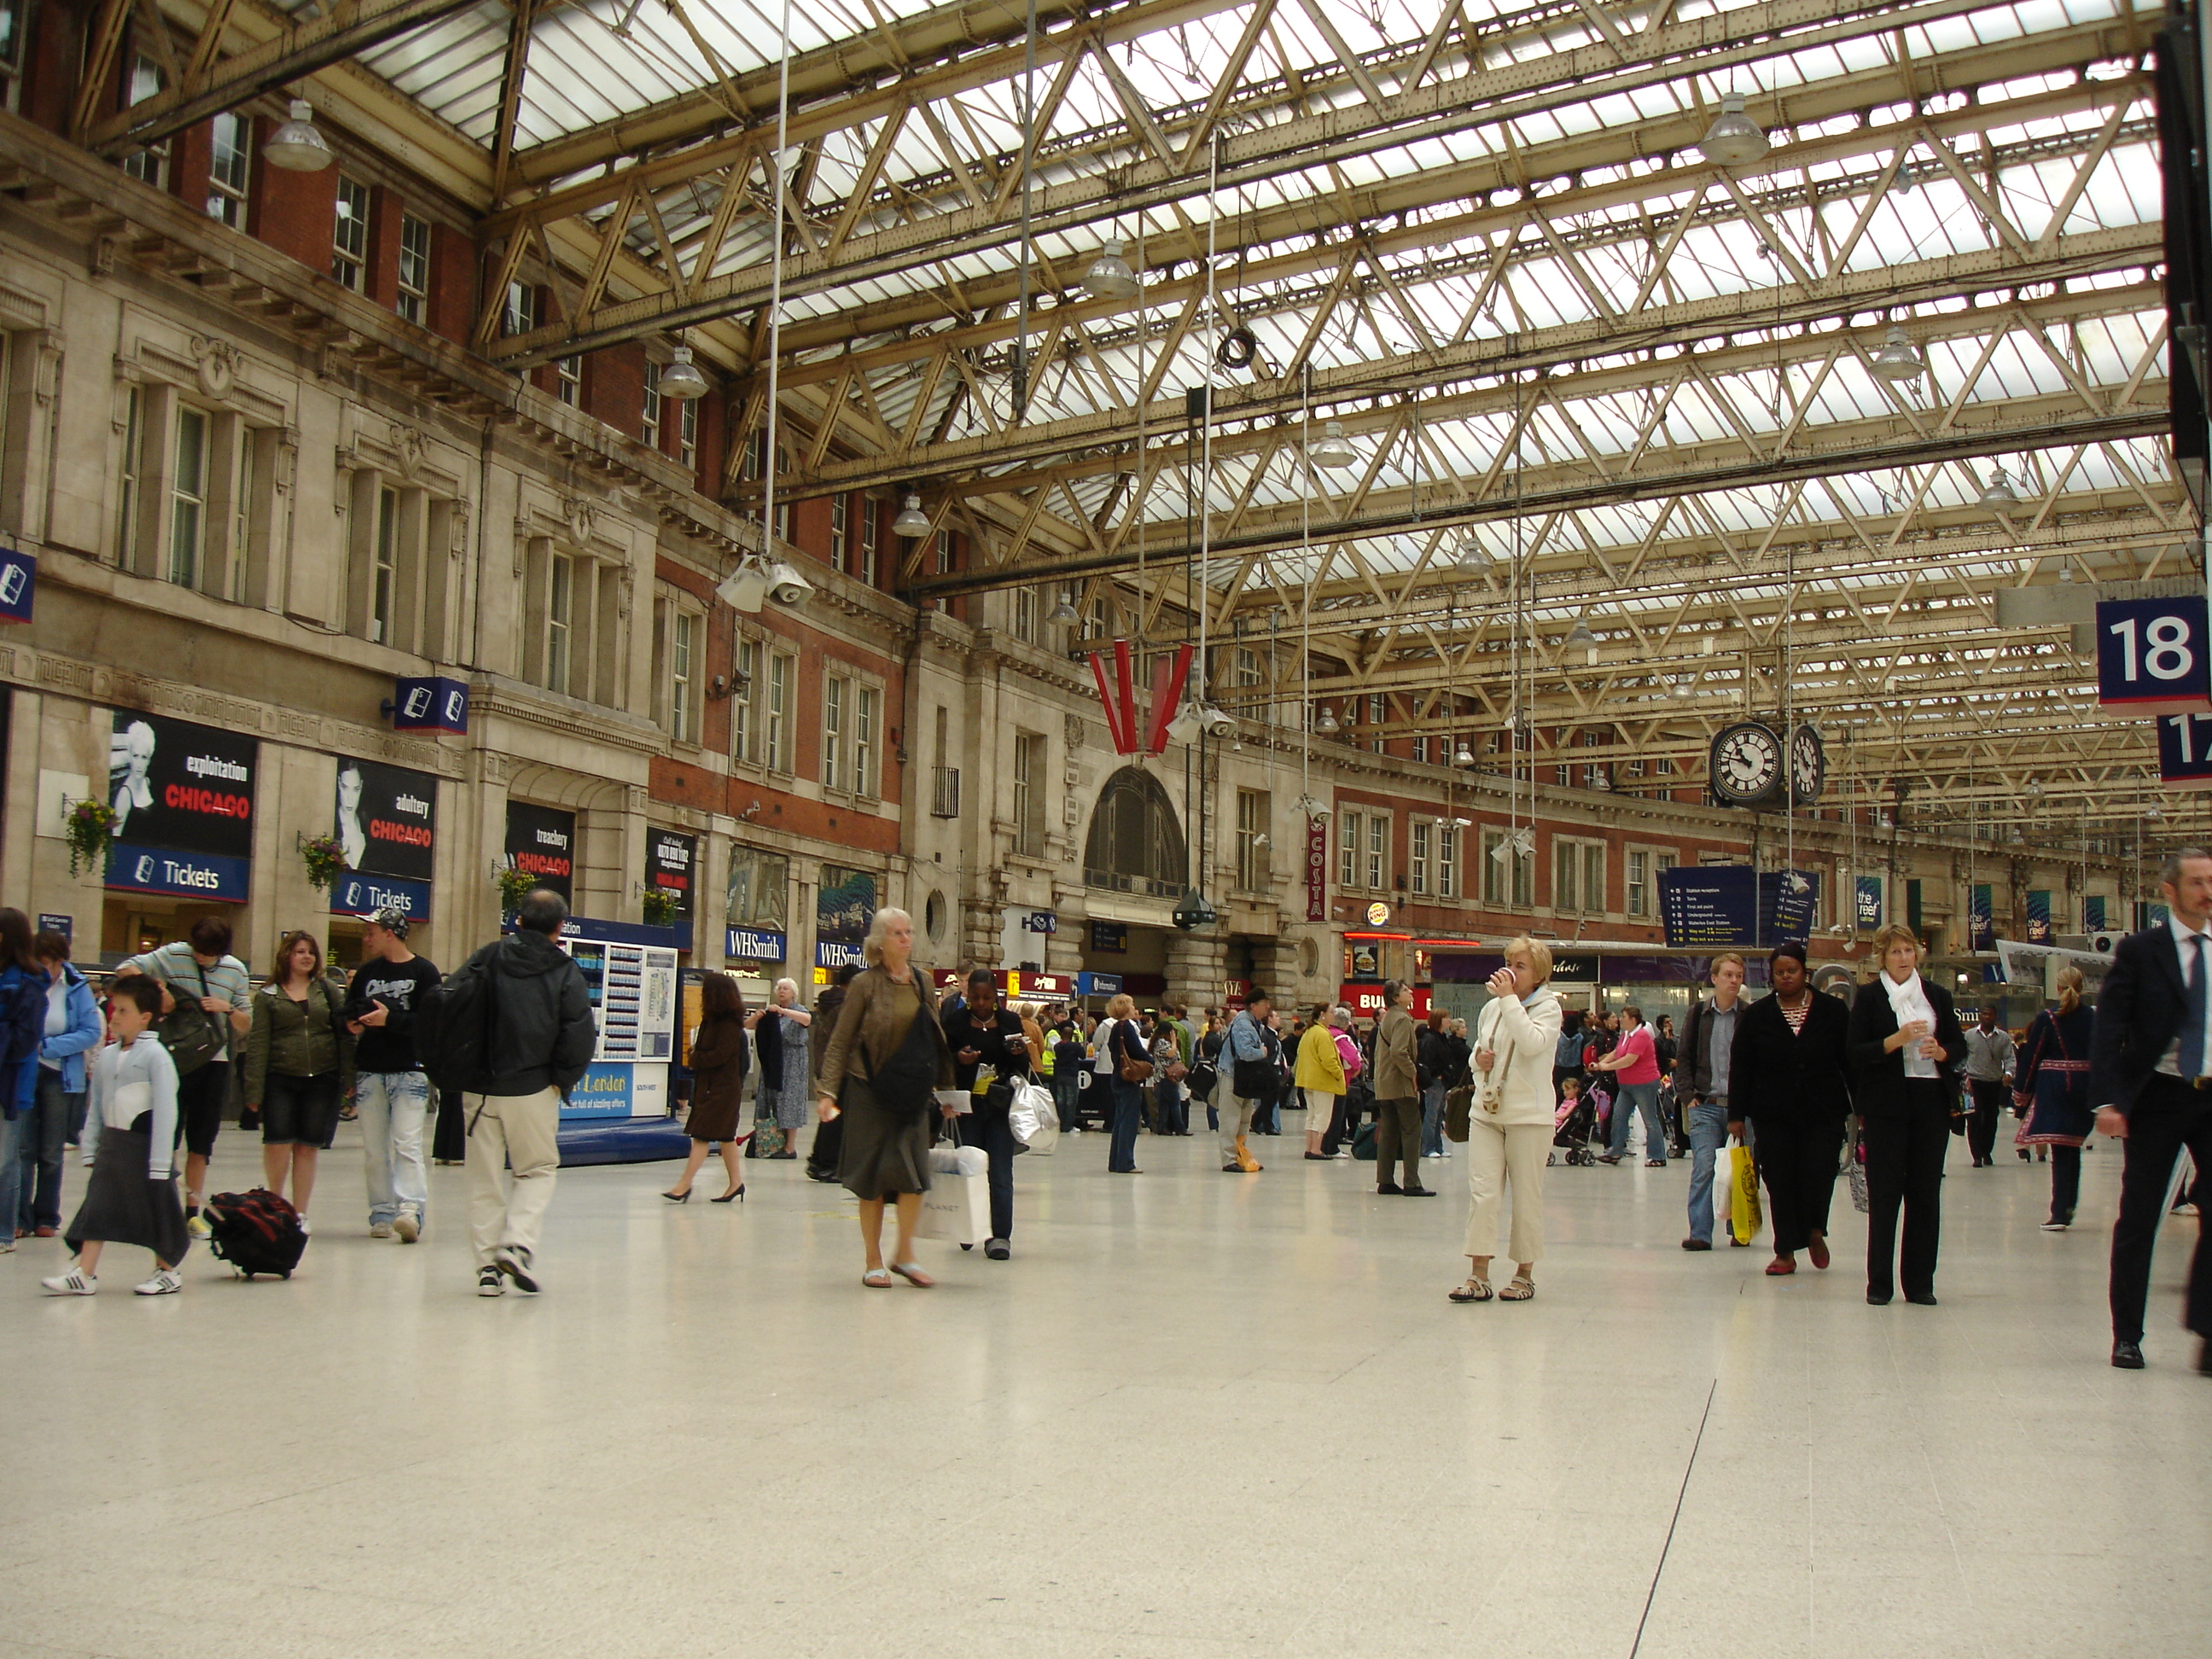 File:Concourse of London Waterloo station.jpg - Wikipedia